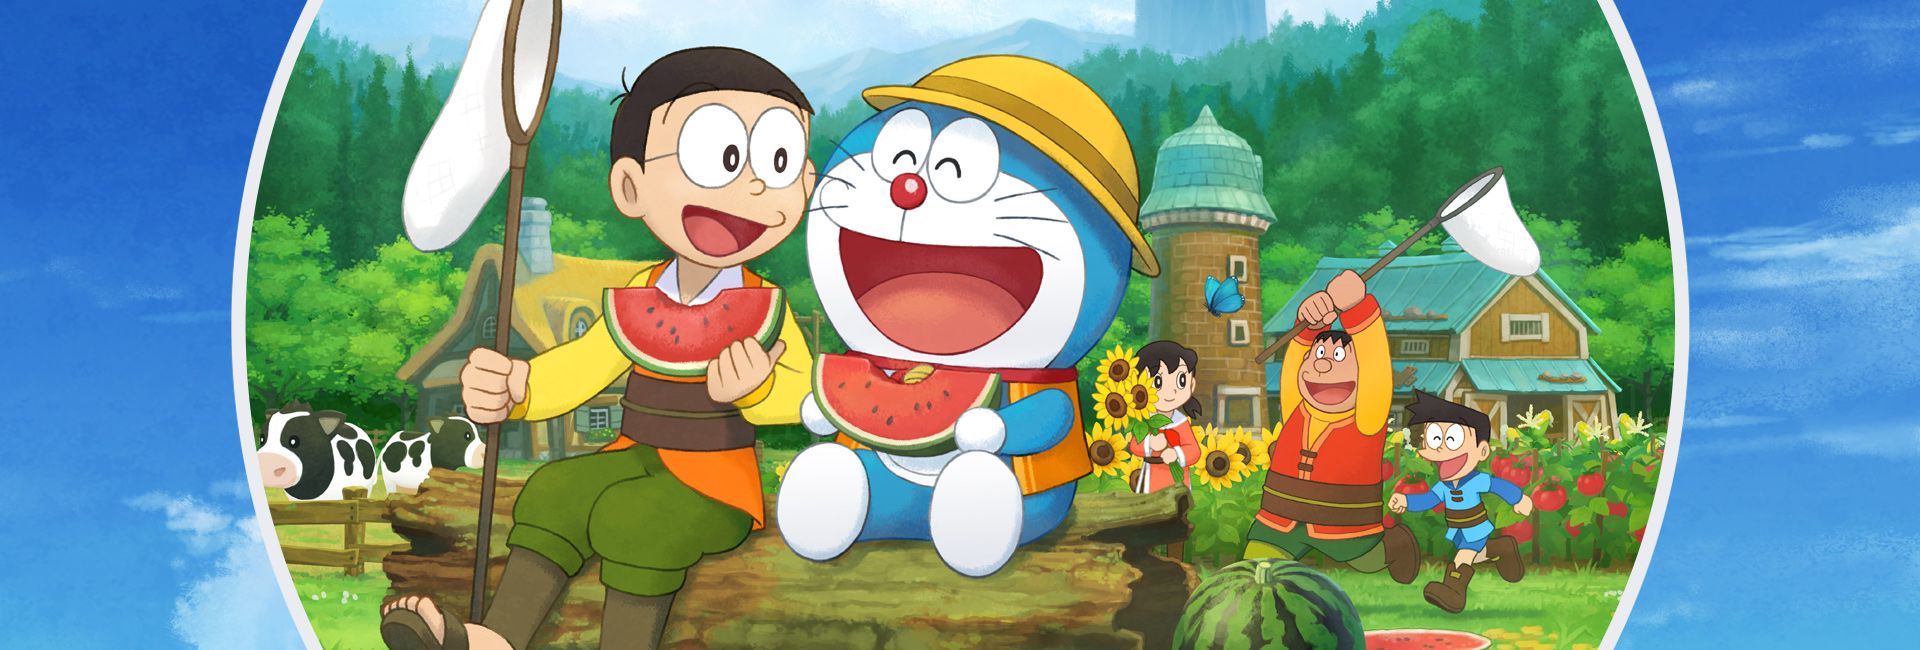 Doraemon, Nobita Nobi, and his friends in a heart-warming journey to create and nurture a flourishing farm